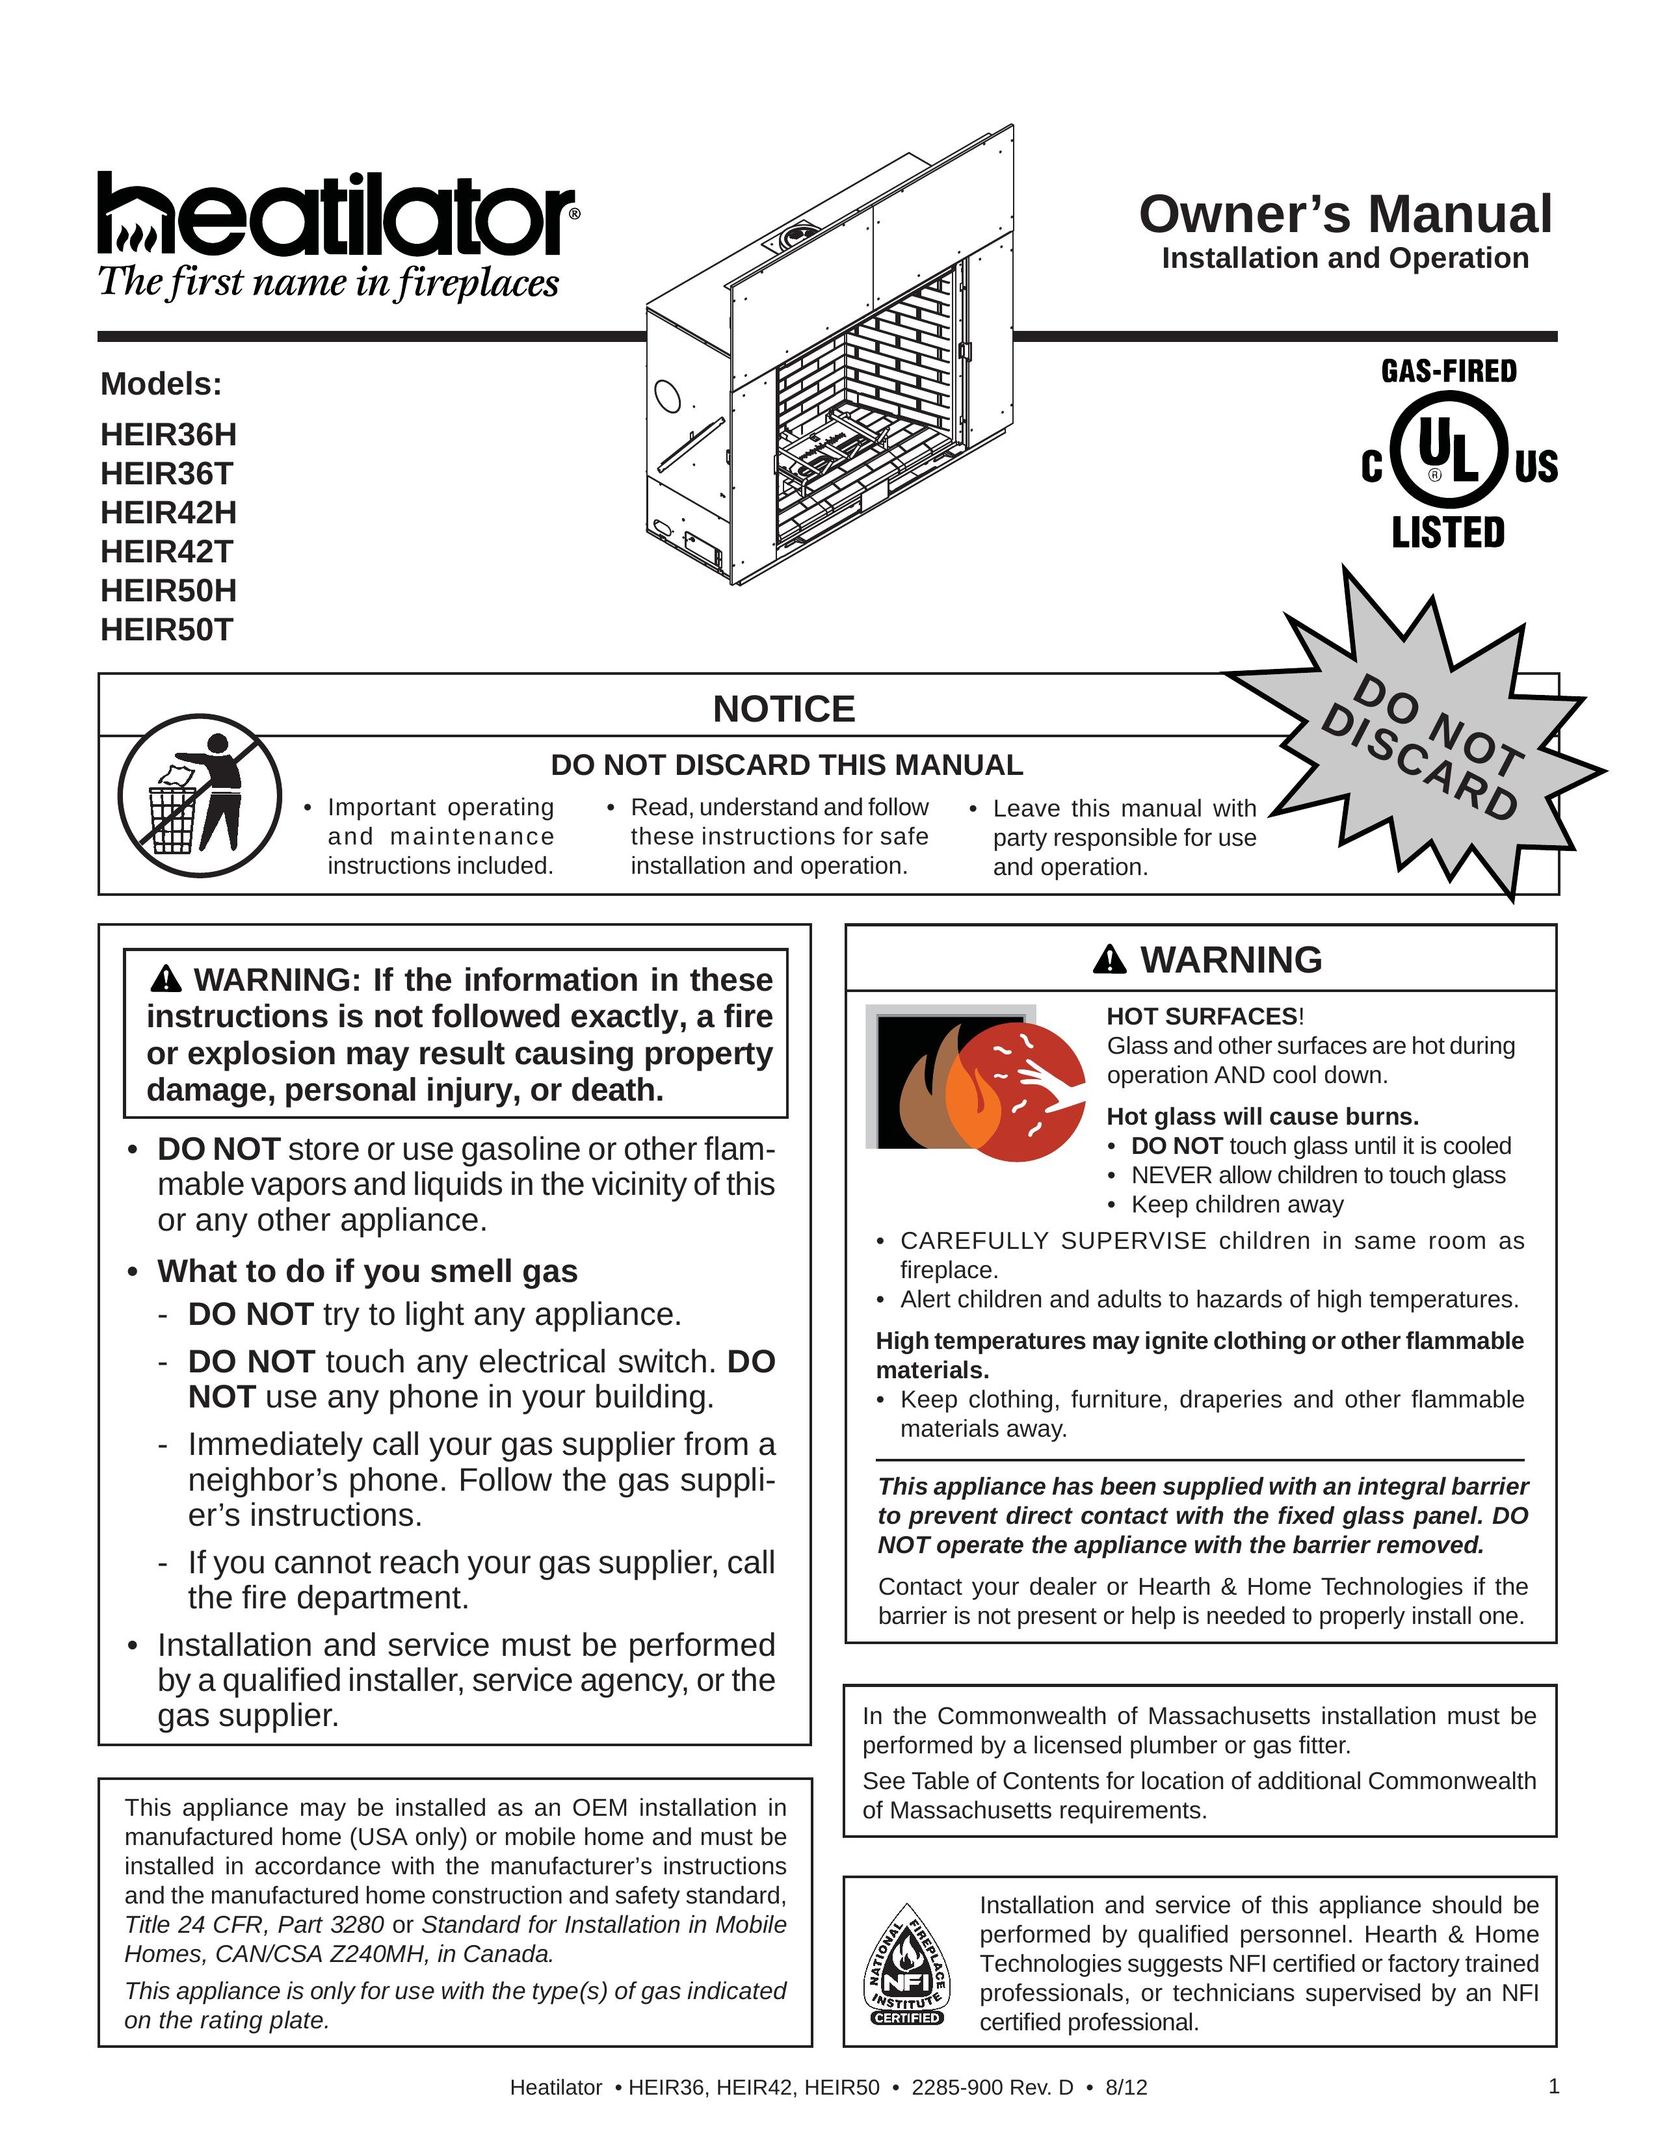 Heatiator HEIR42H Indoor Fireplace User Manual